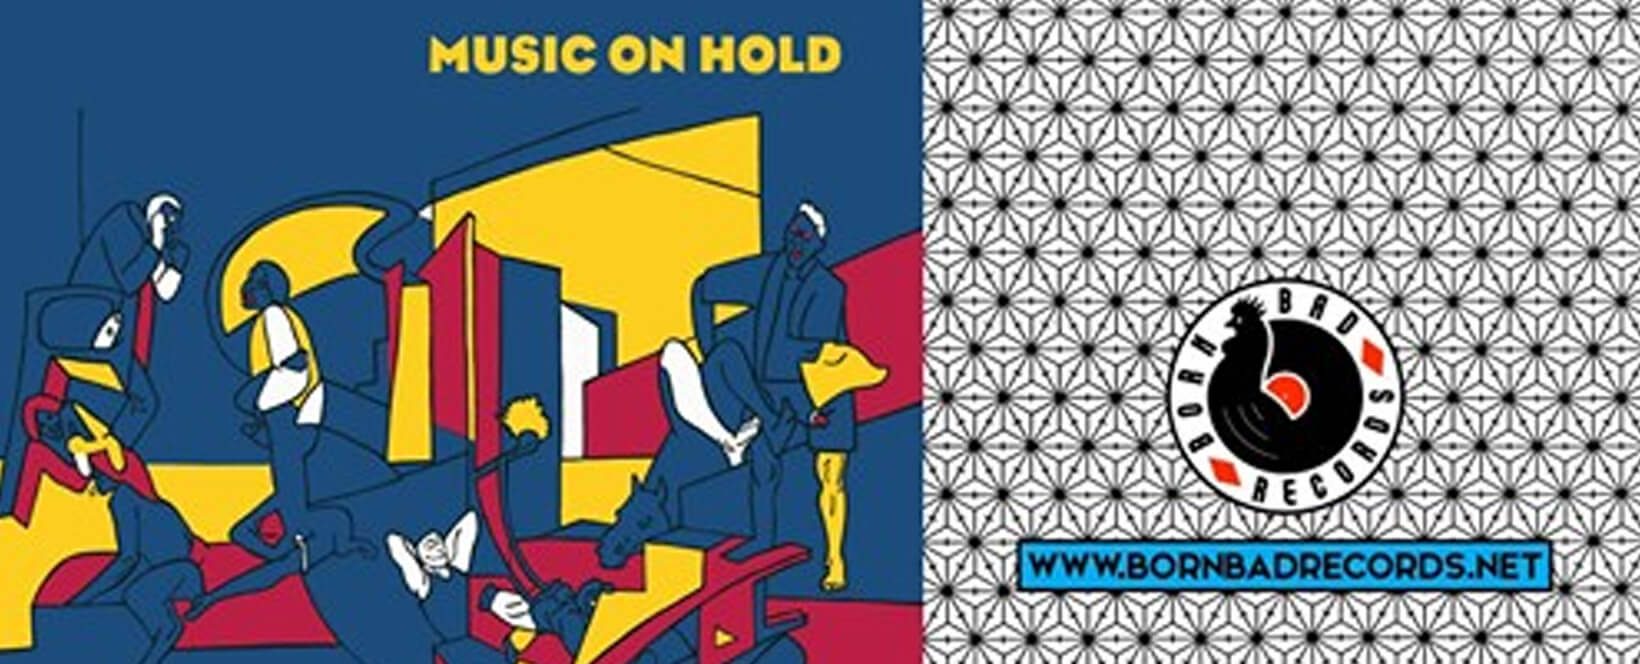 BC-370-Album - MUSIC ON HOLD - Radio Galaxie 98.5FM